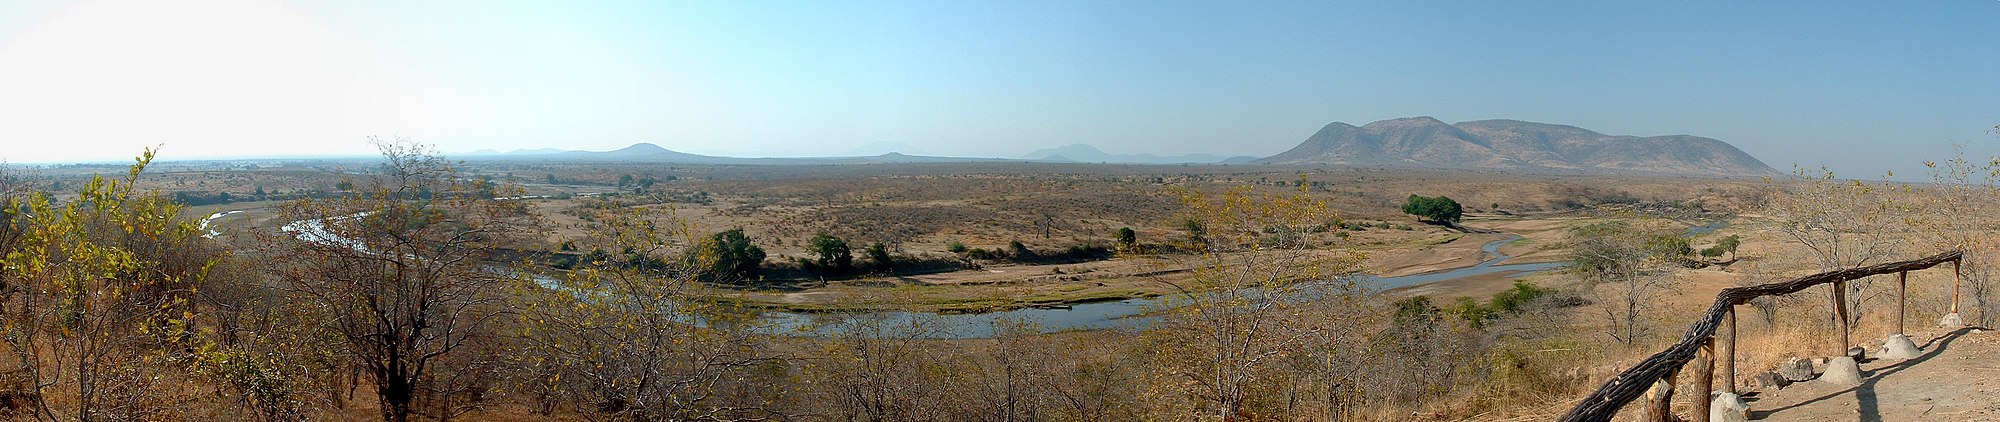 Panorama fra Ruaha nationalpark.Foto: PjvanErp